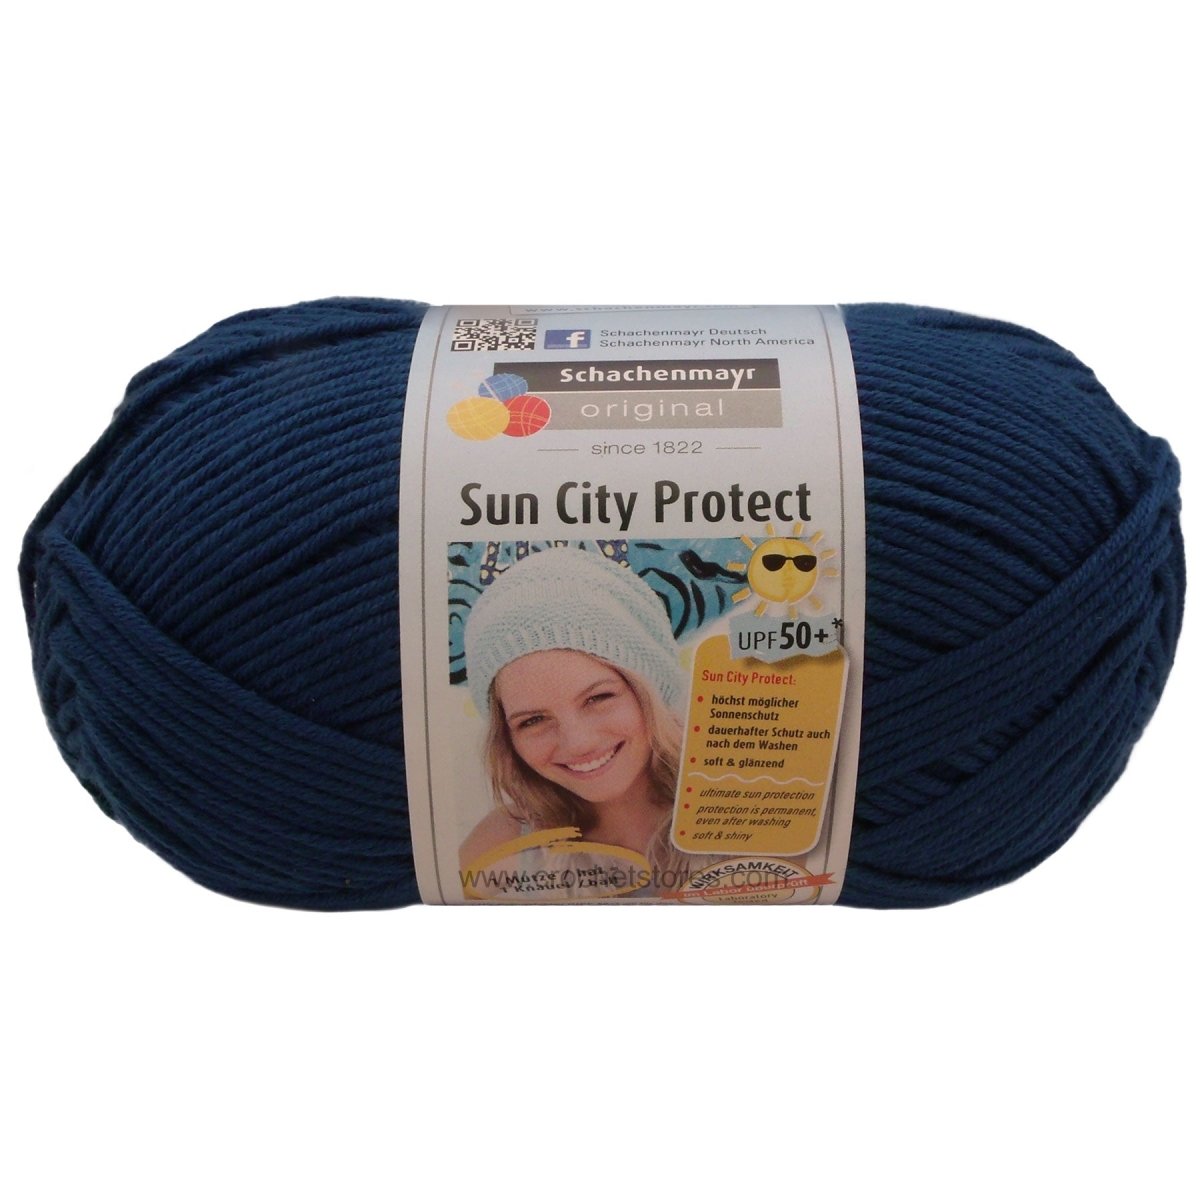 SUN CITY PROTECT - Crochetstores9807778-2504053859018890